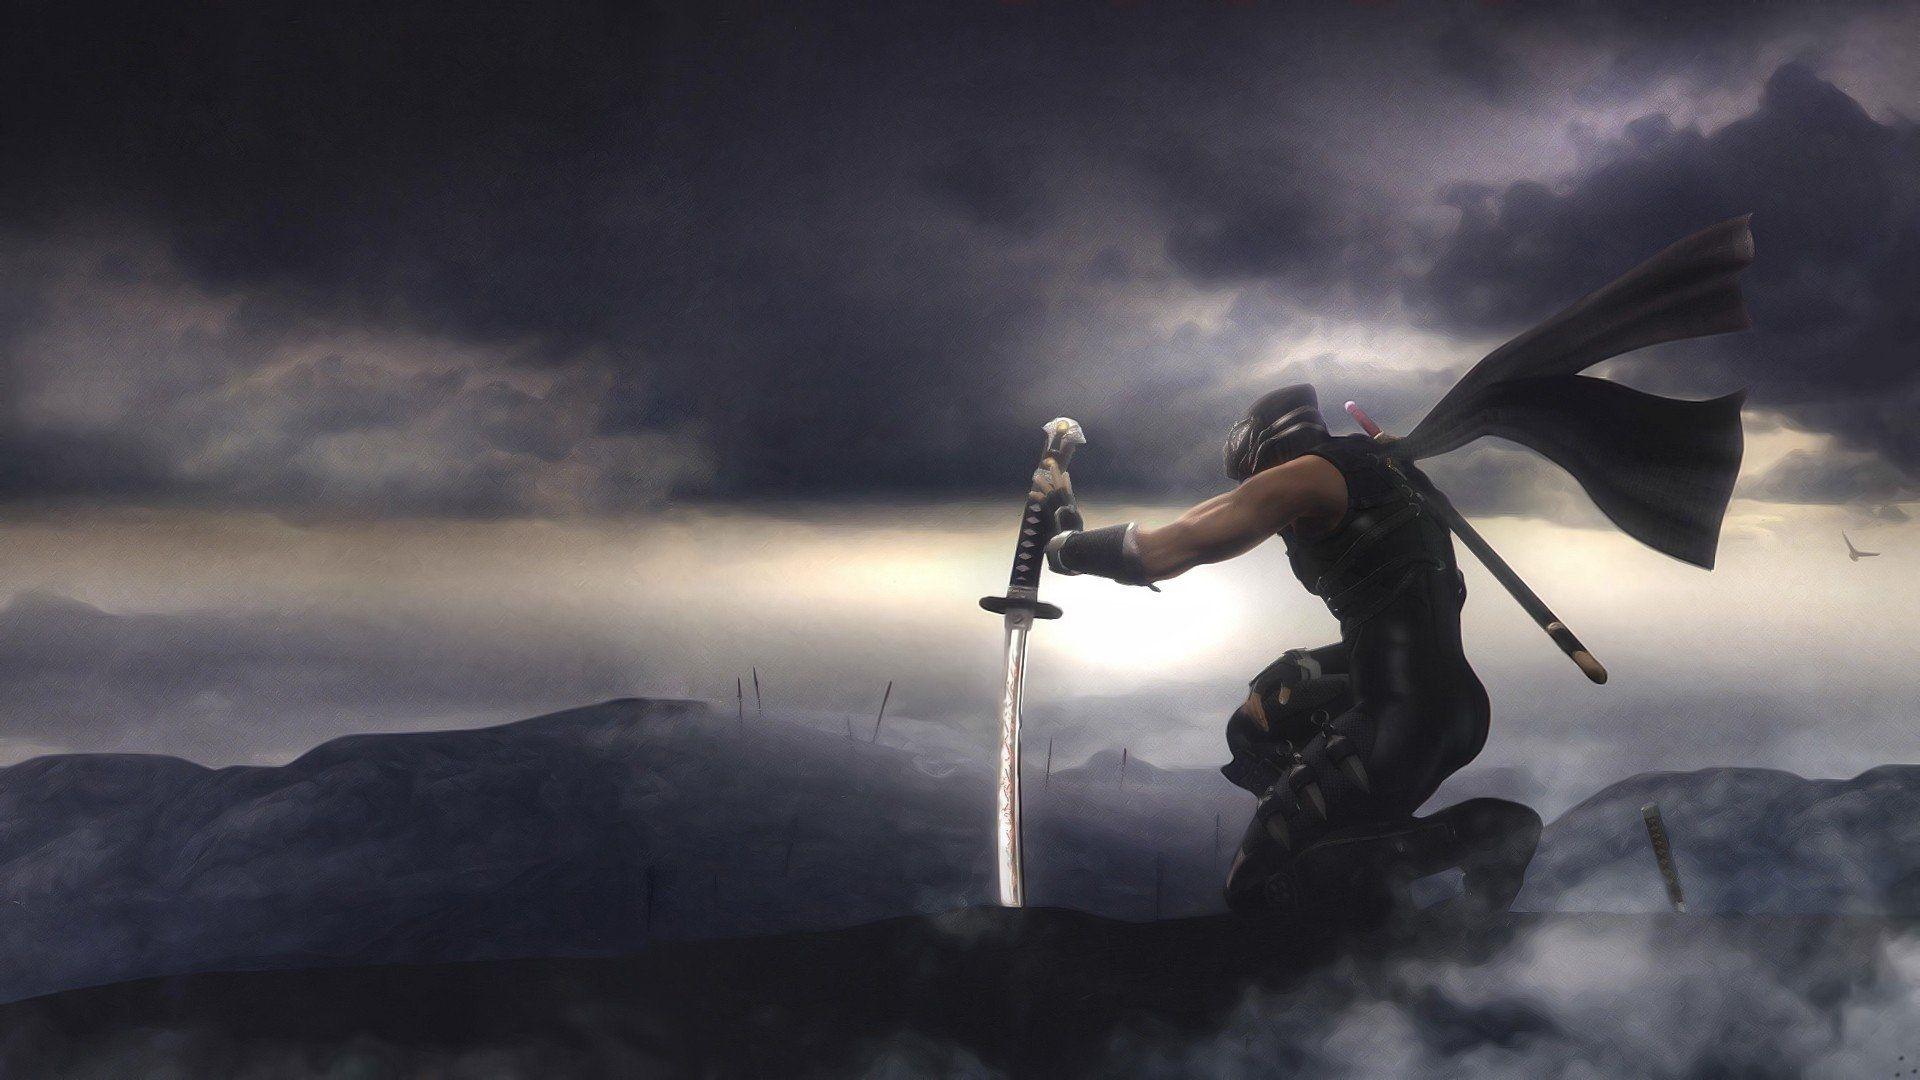 Ninja Gaiden HD Wallpaper and Background Image